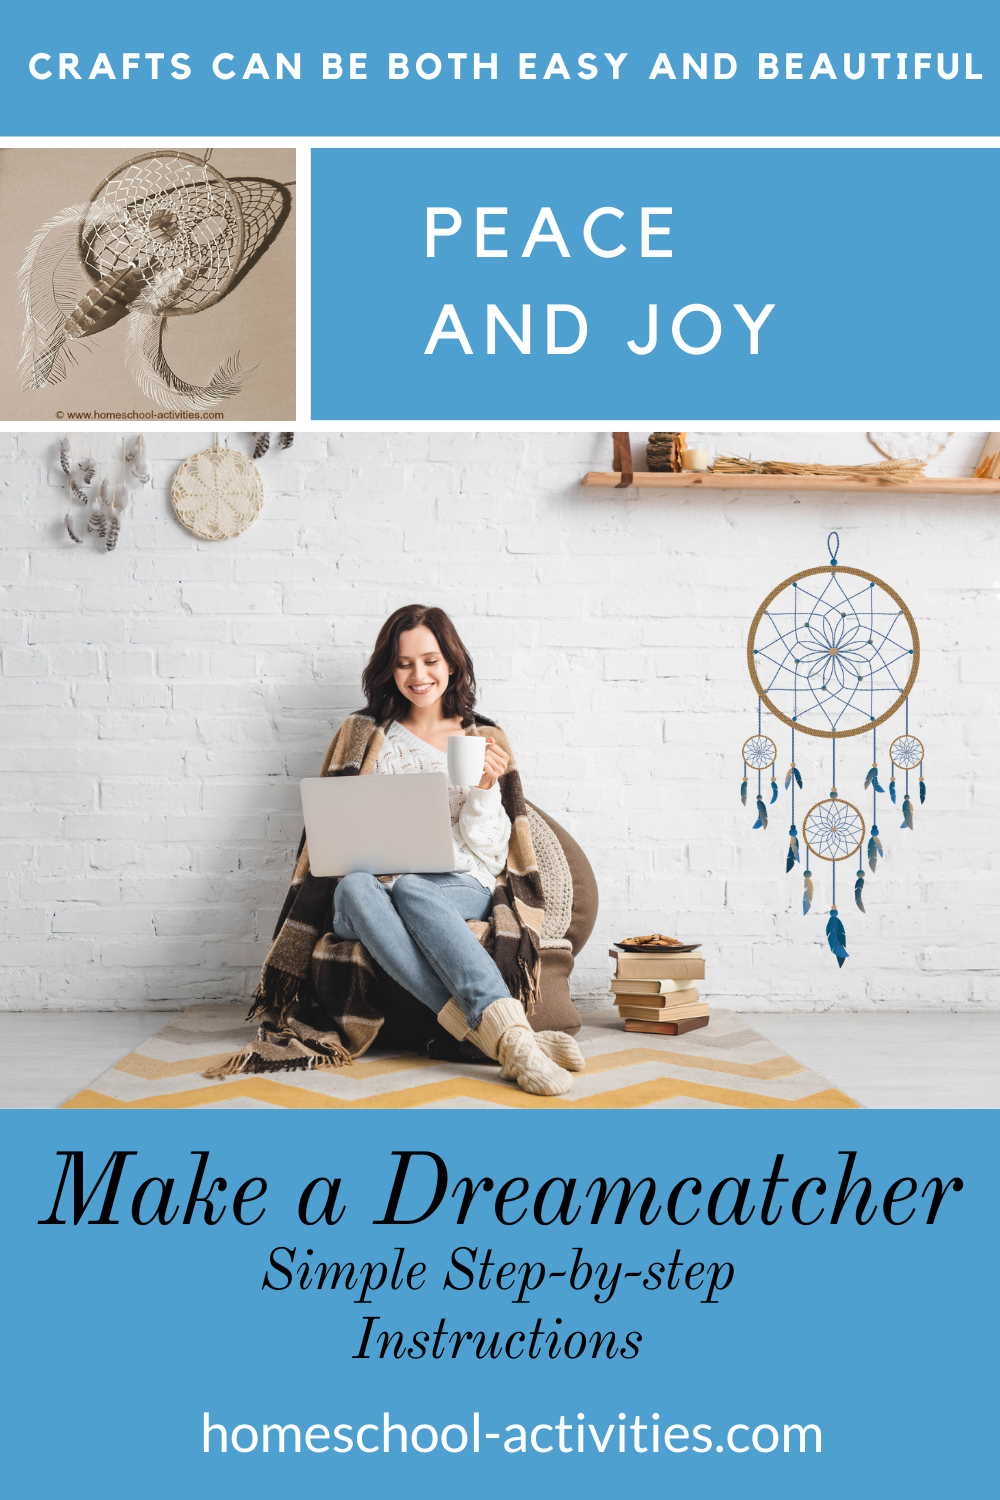 Make a Dreamcatcher Step by Step pin 121 kb